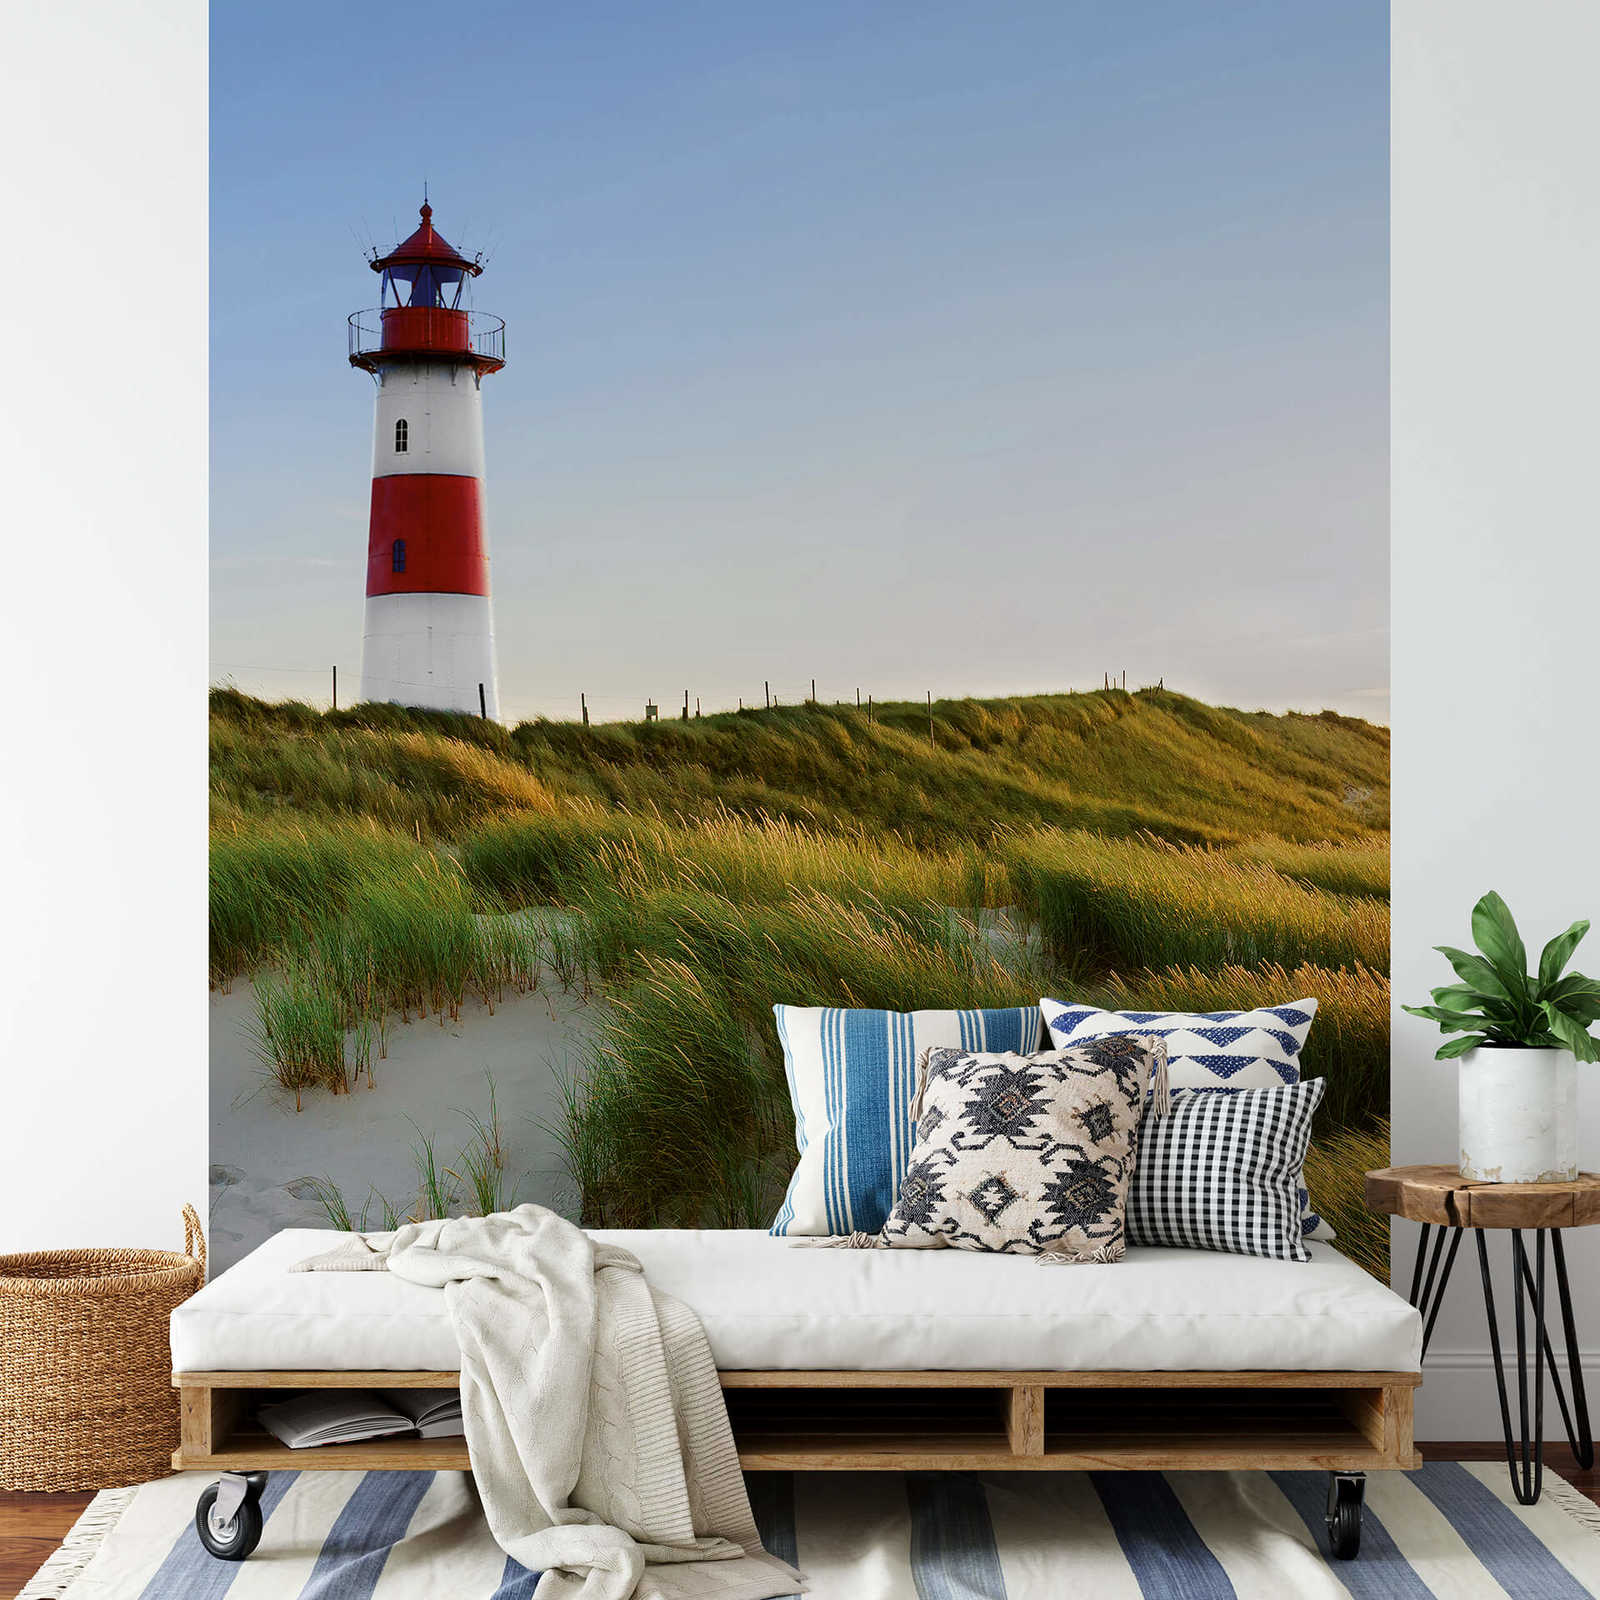             Beach mural lighthouse & dunes in portrait format
        